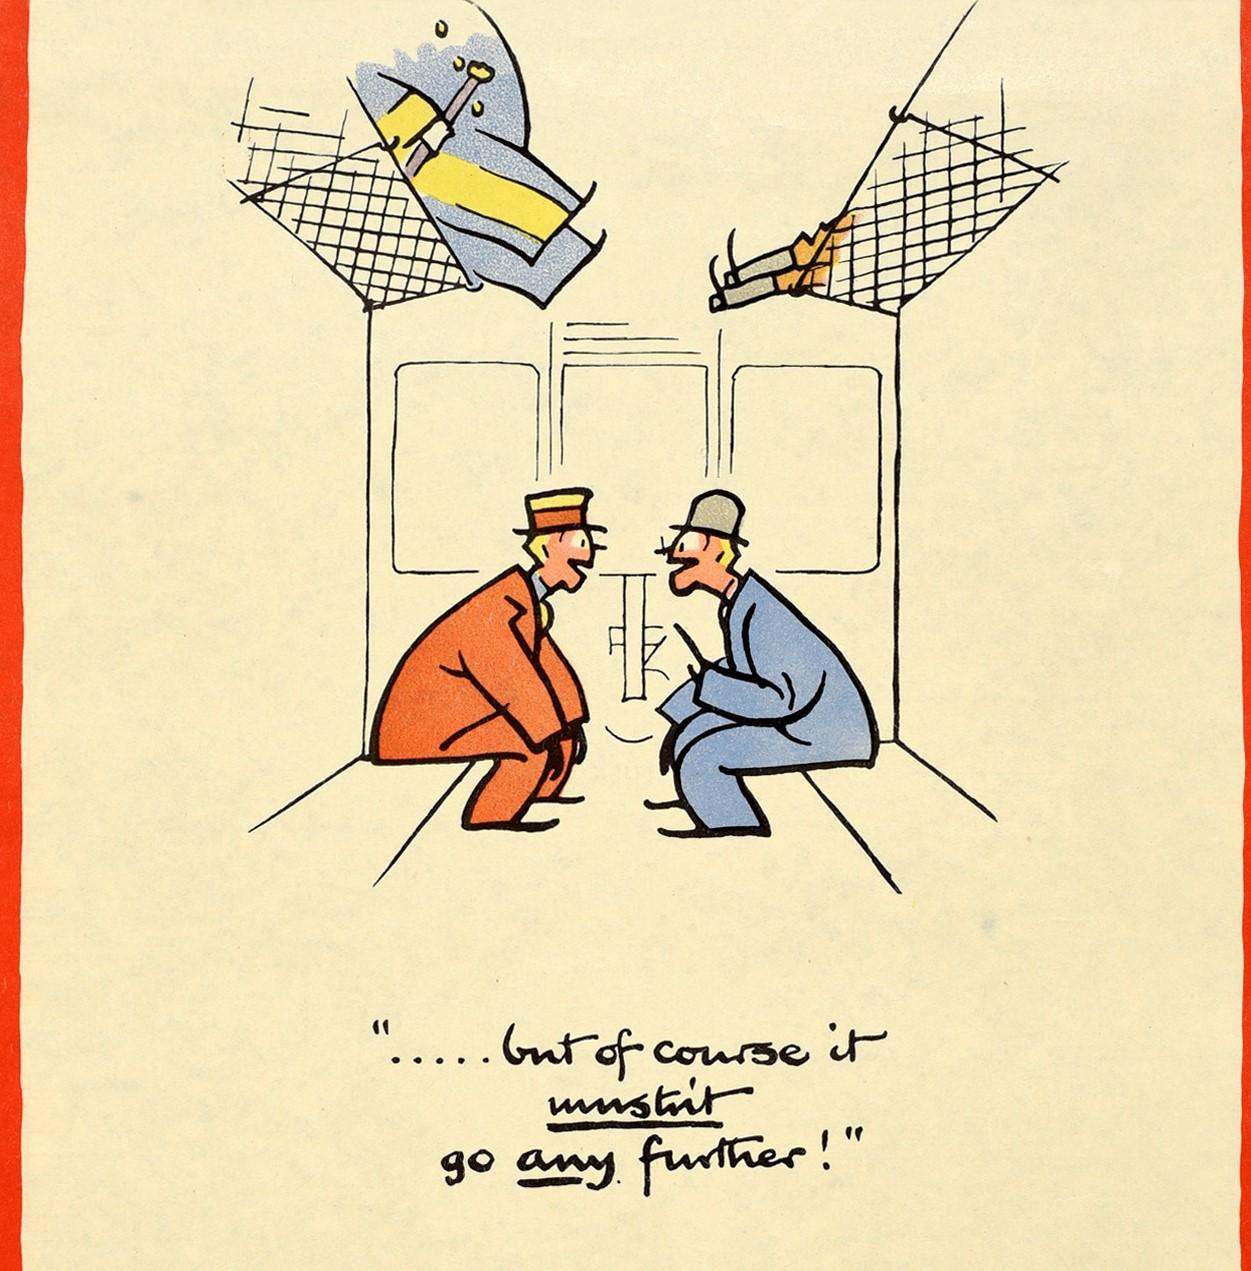 Original Vintage Poster Careless Talk Costs Lives WWII Train Design Warning - Orange Print by Fougasse (Cyril Kenneth Bird)